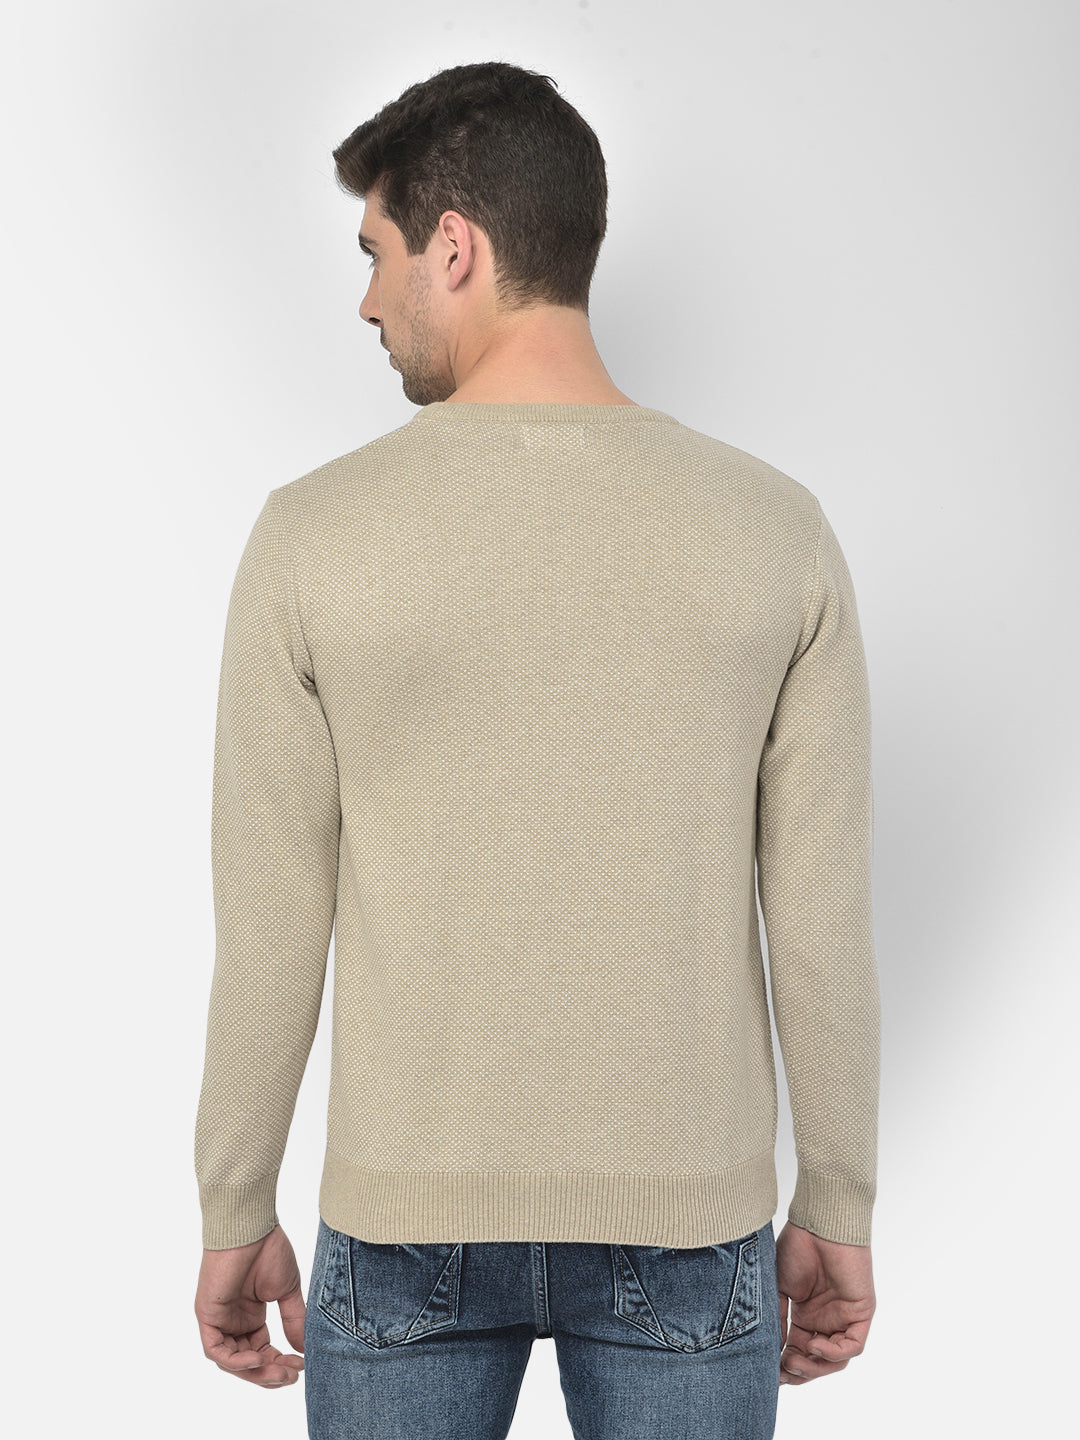 Beige Self Design Round Neck Sweater - Men Sweaters